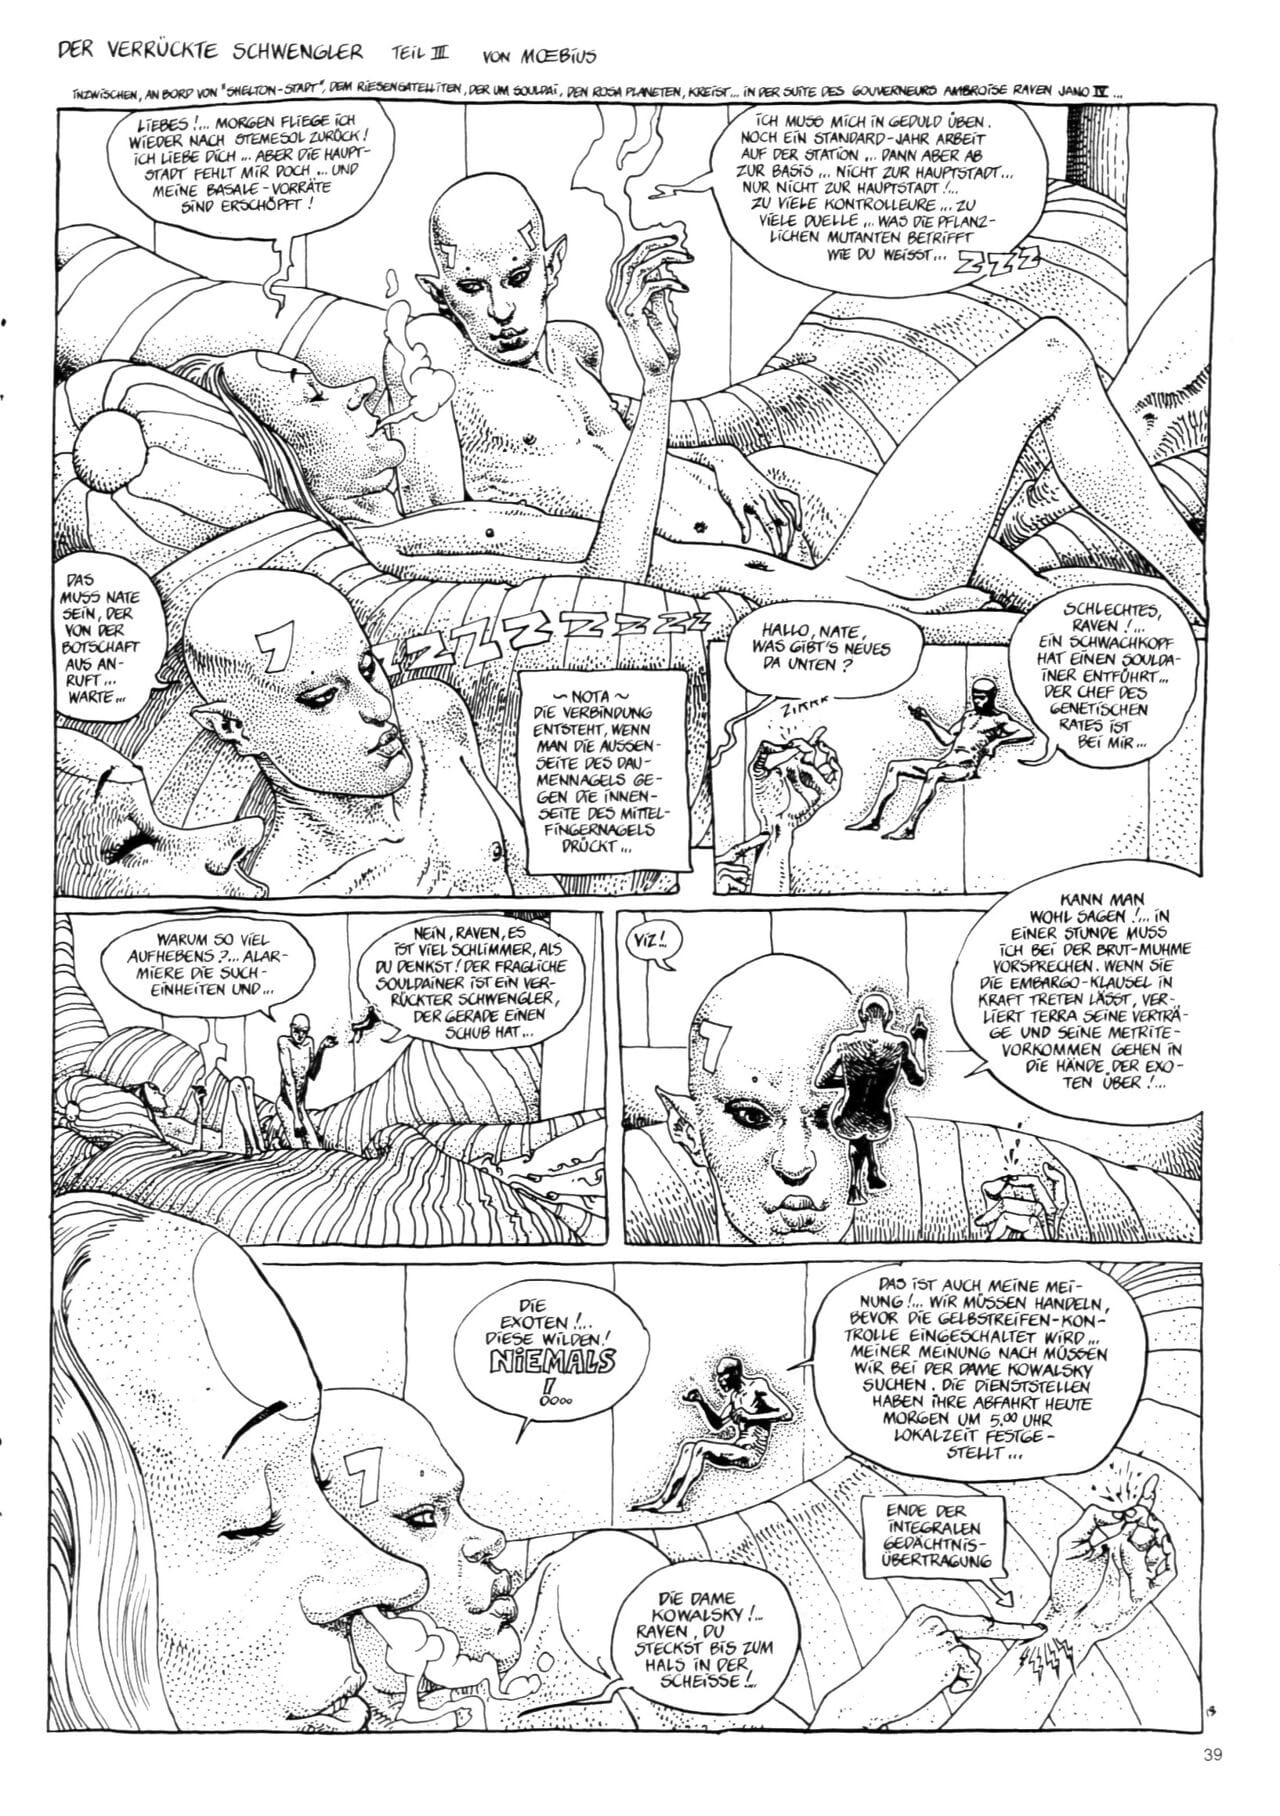 Schwermetall #039 parte 2 page 1